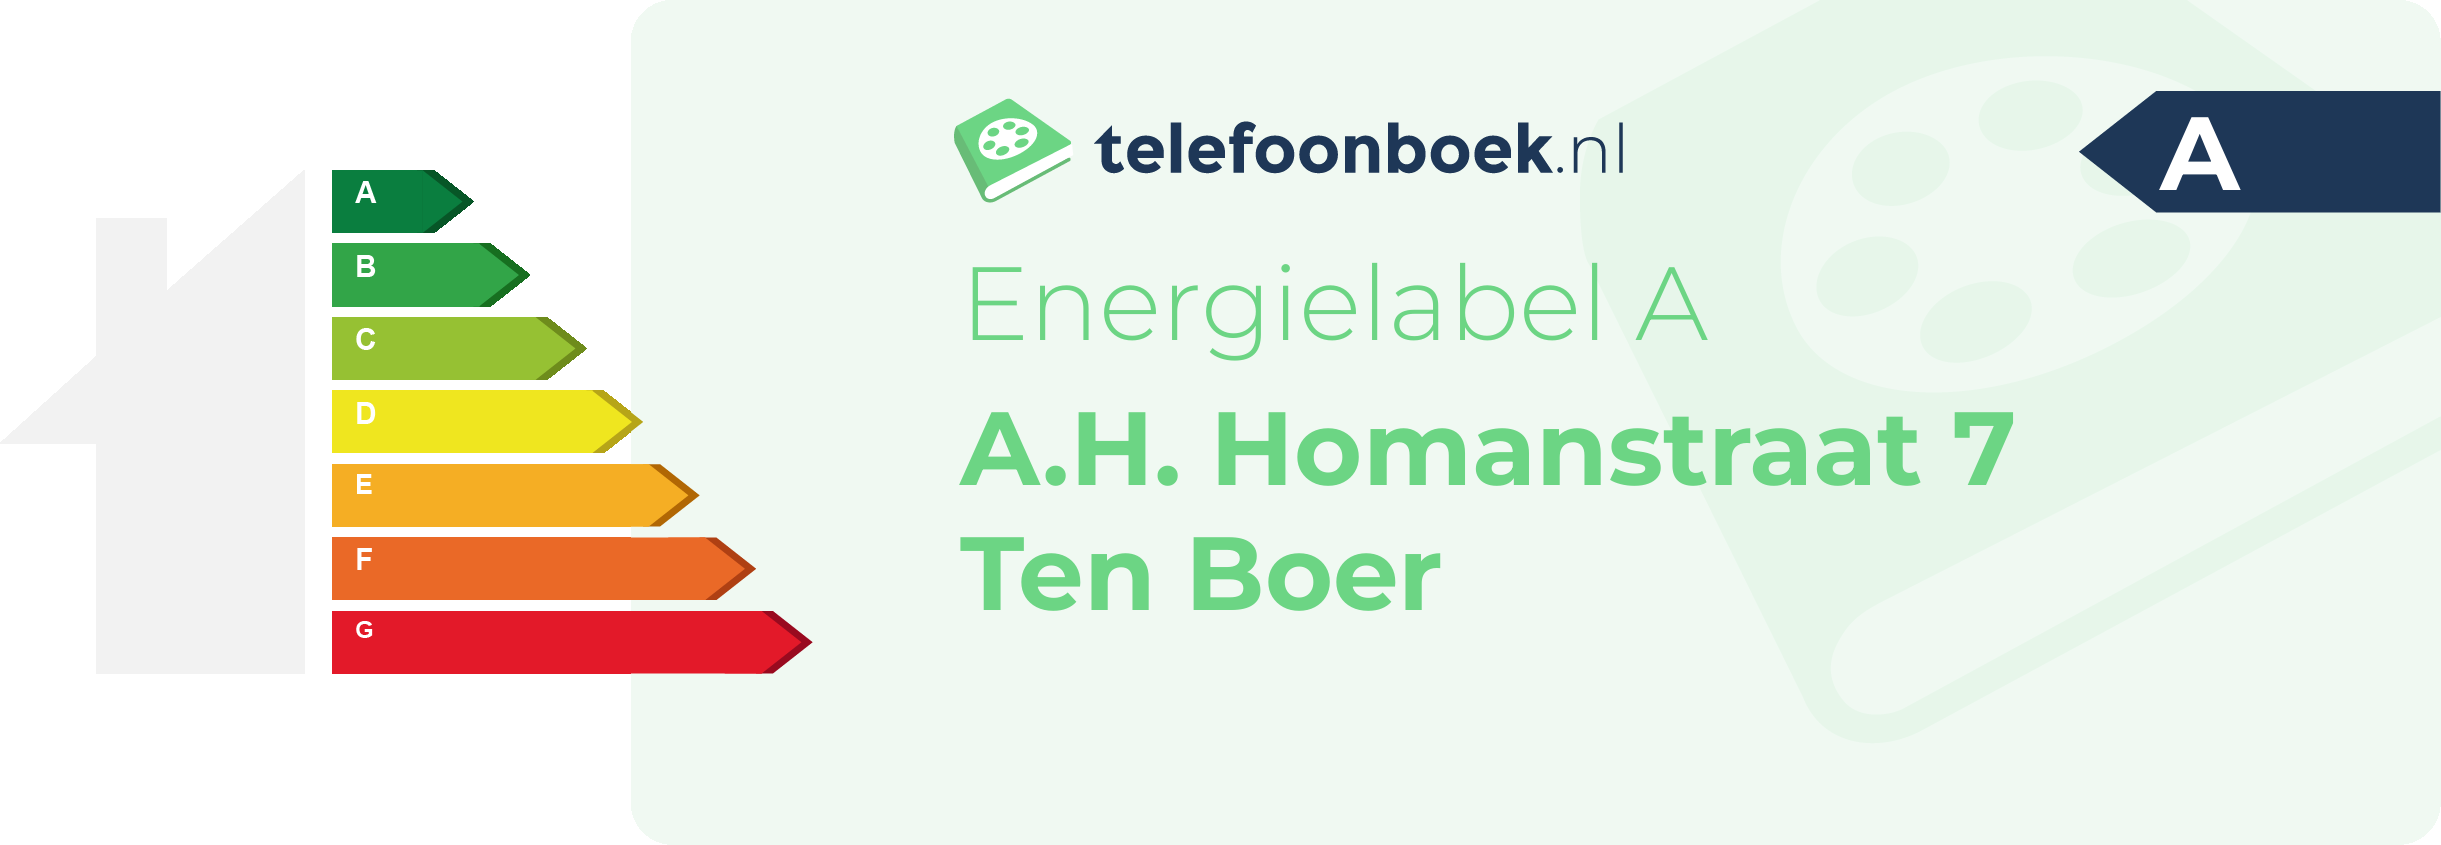 Energielabel A.H. Homanstraat 7 Ten Boer